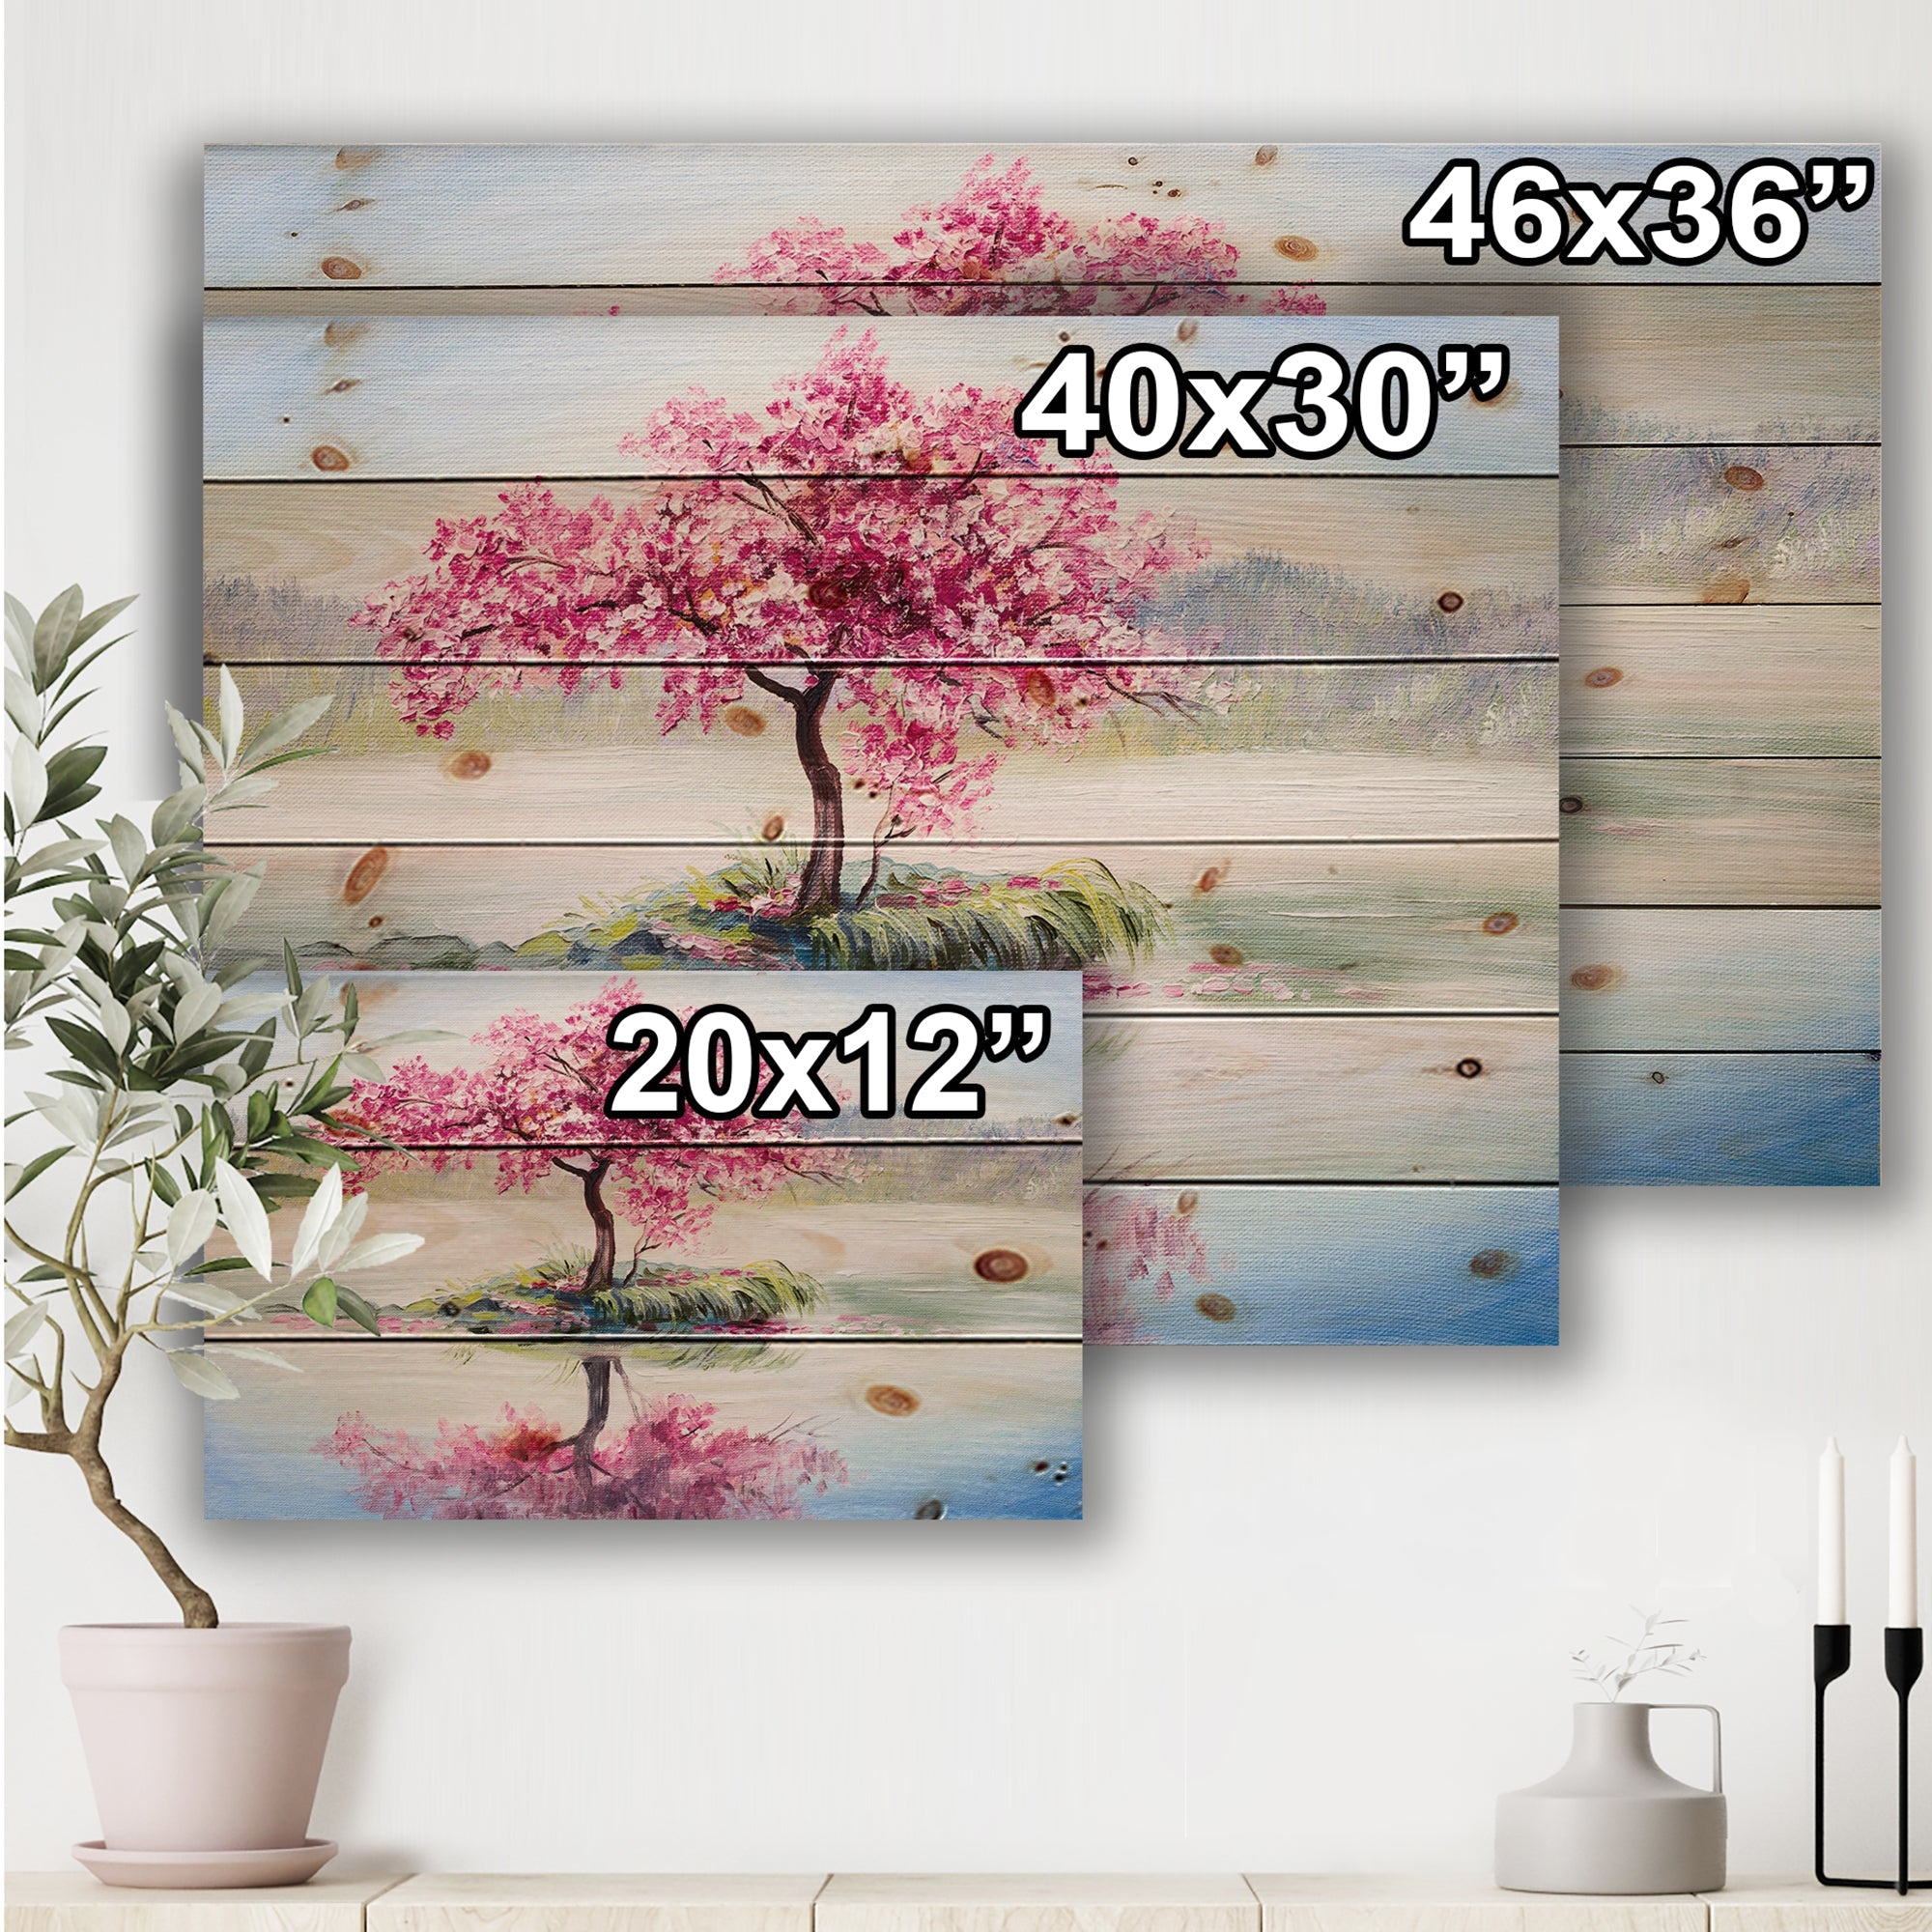 Japanese Cherry Blossom Tree On Little Idyllic IsLand - Farmhouse Print on Natural Pine Wood